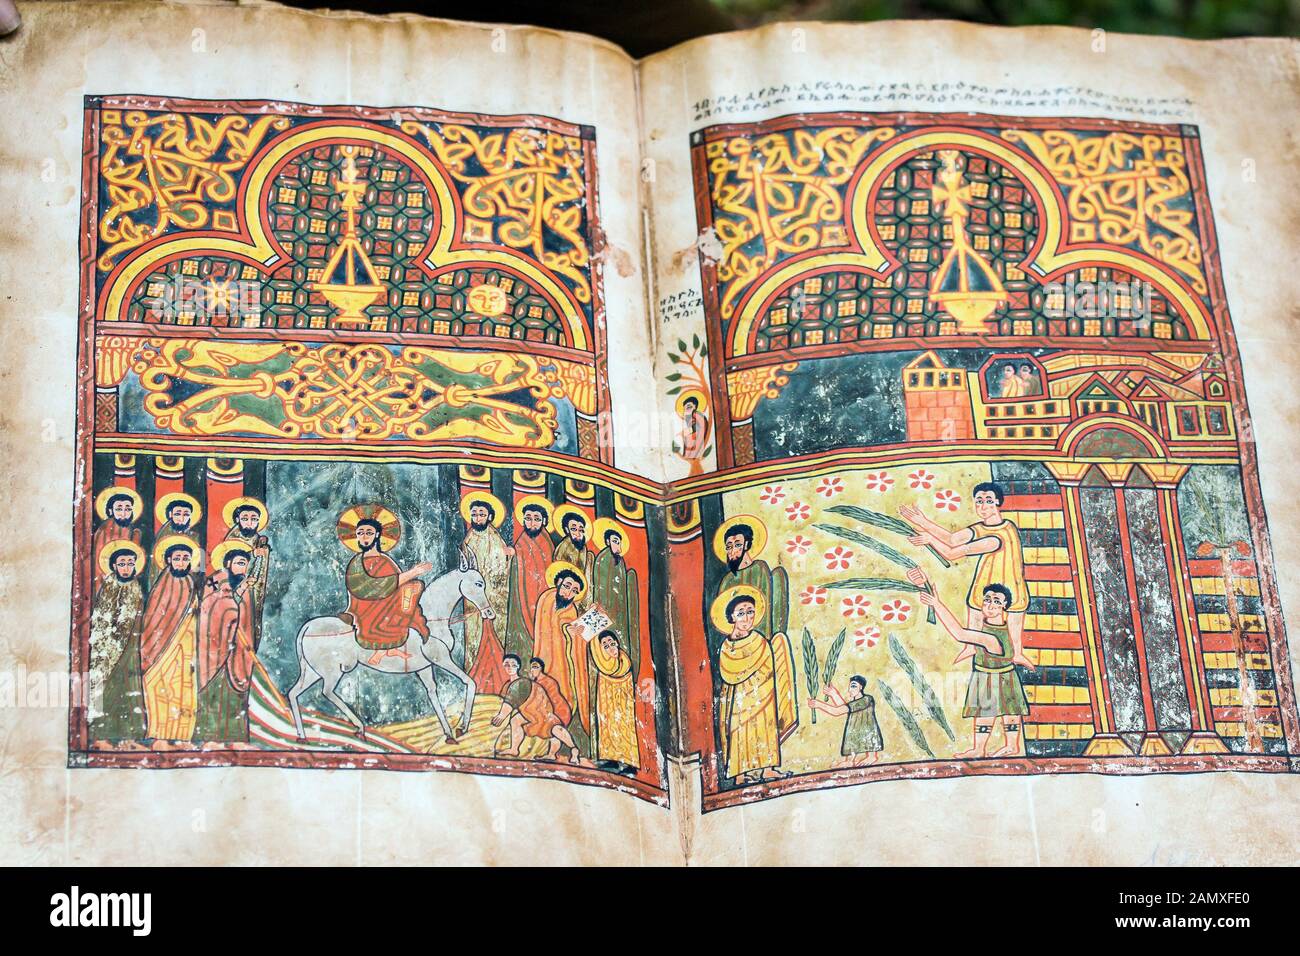 The monastery’s treasures include ancient illuminated manuscript. Kebran Gabriel  monastery, Kebran Gabriel Island, Lake Tana. Ethiopia. Stock Photo